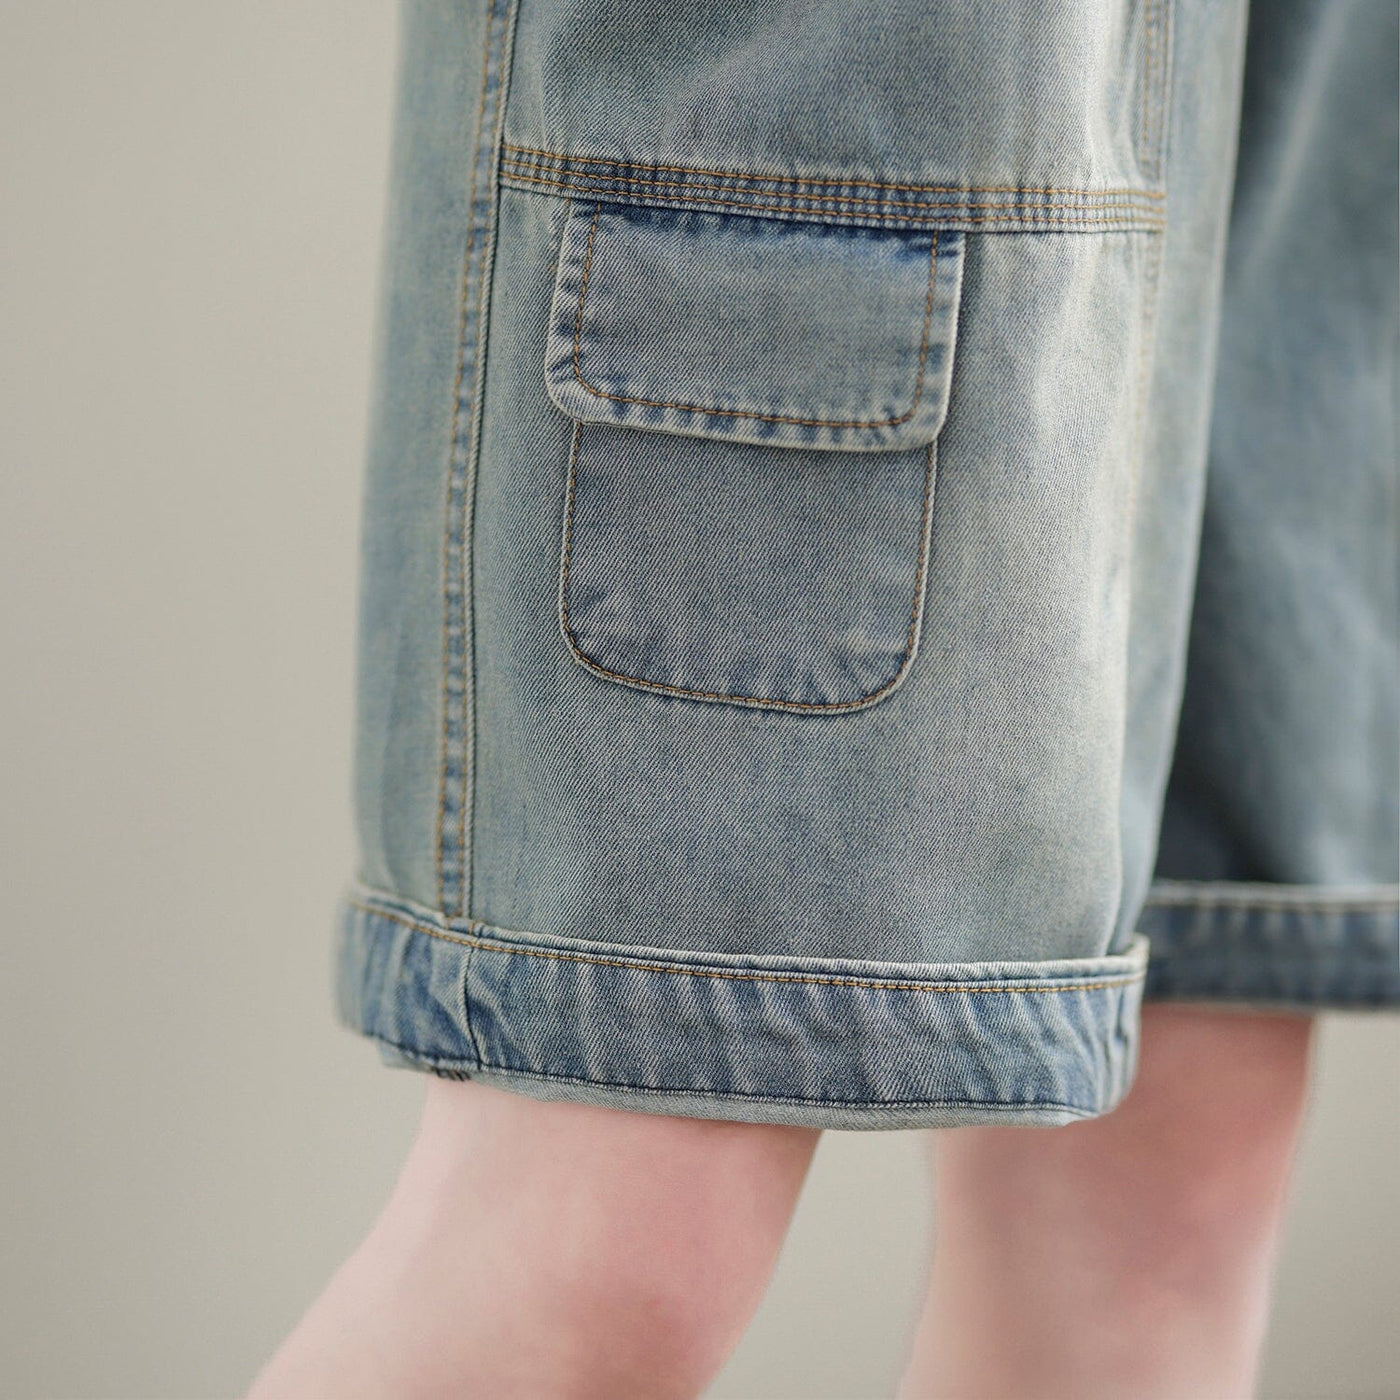 Women Summer Casual Solid Denim Shorts